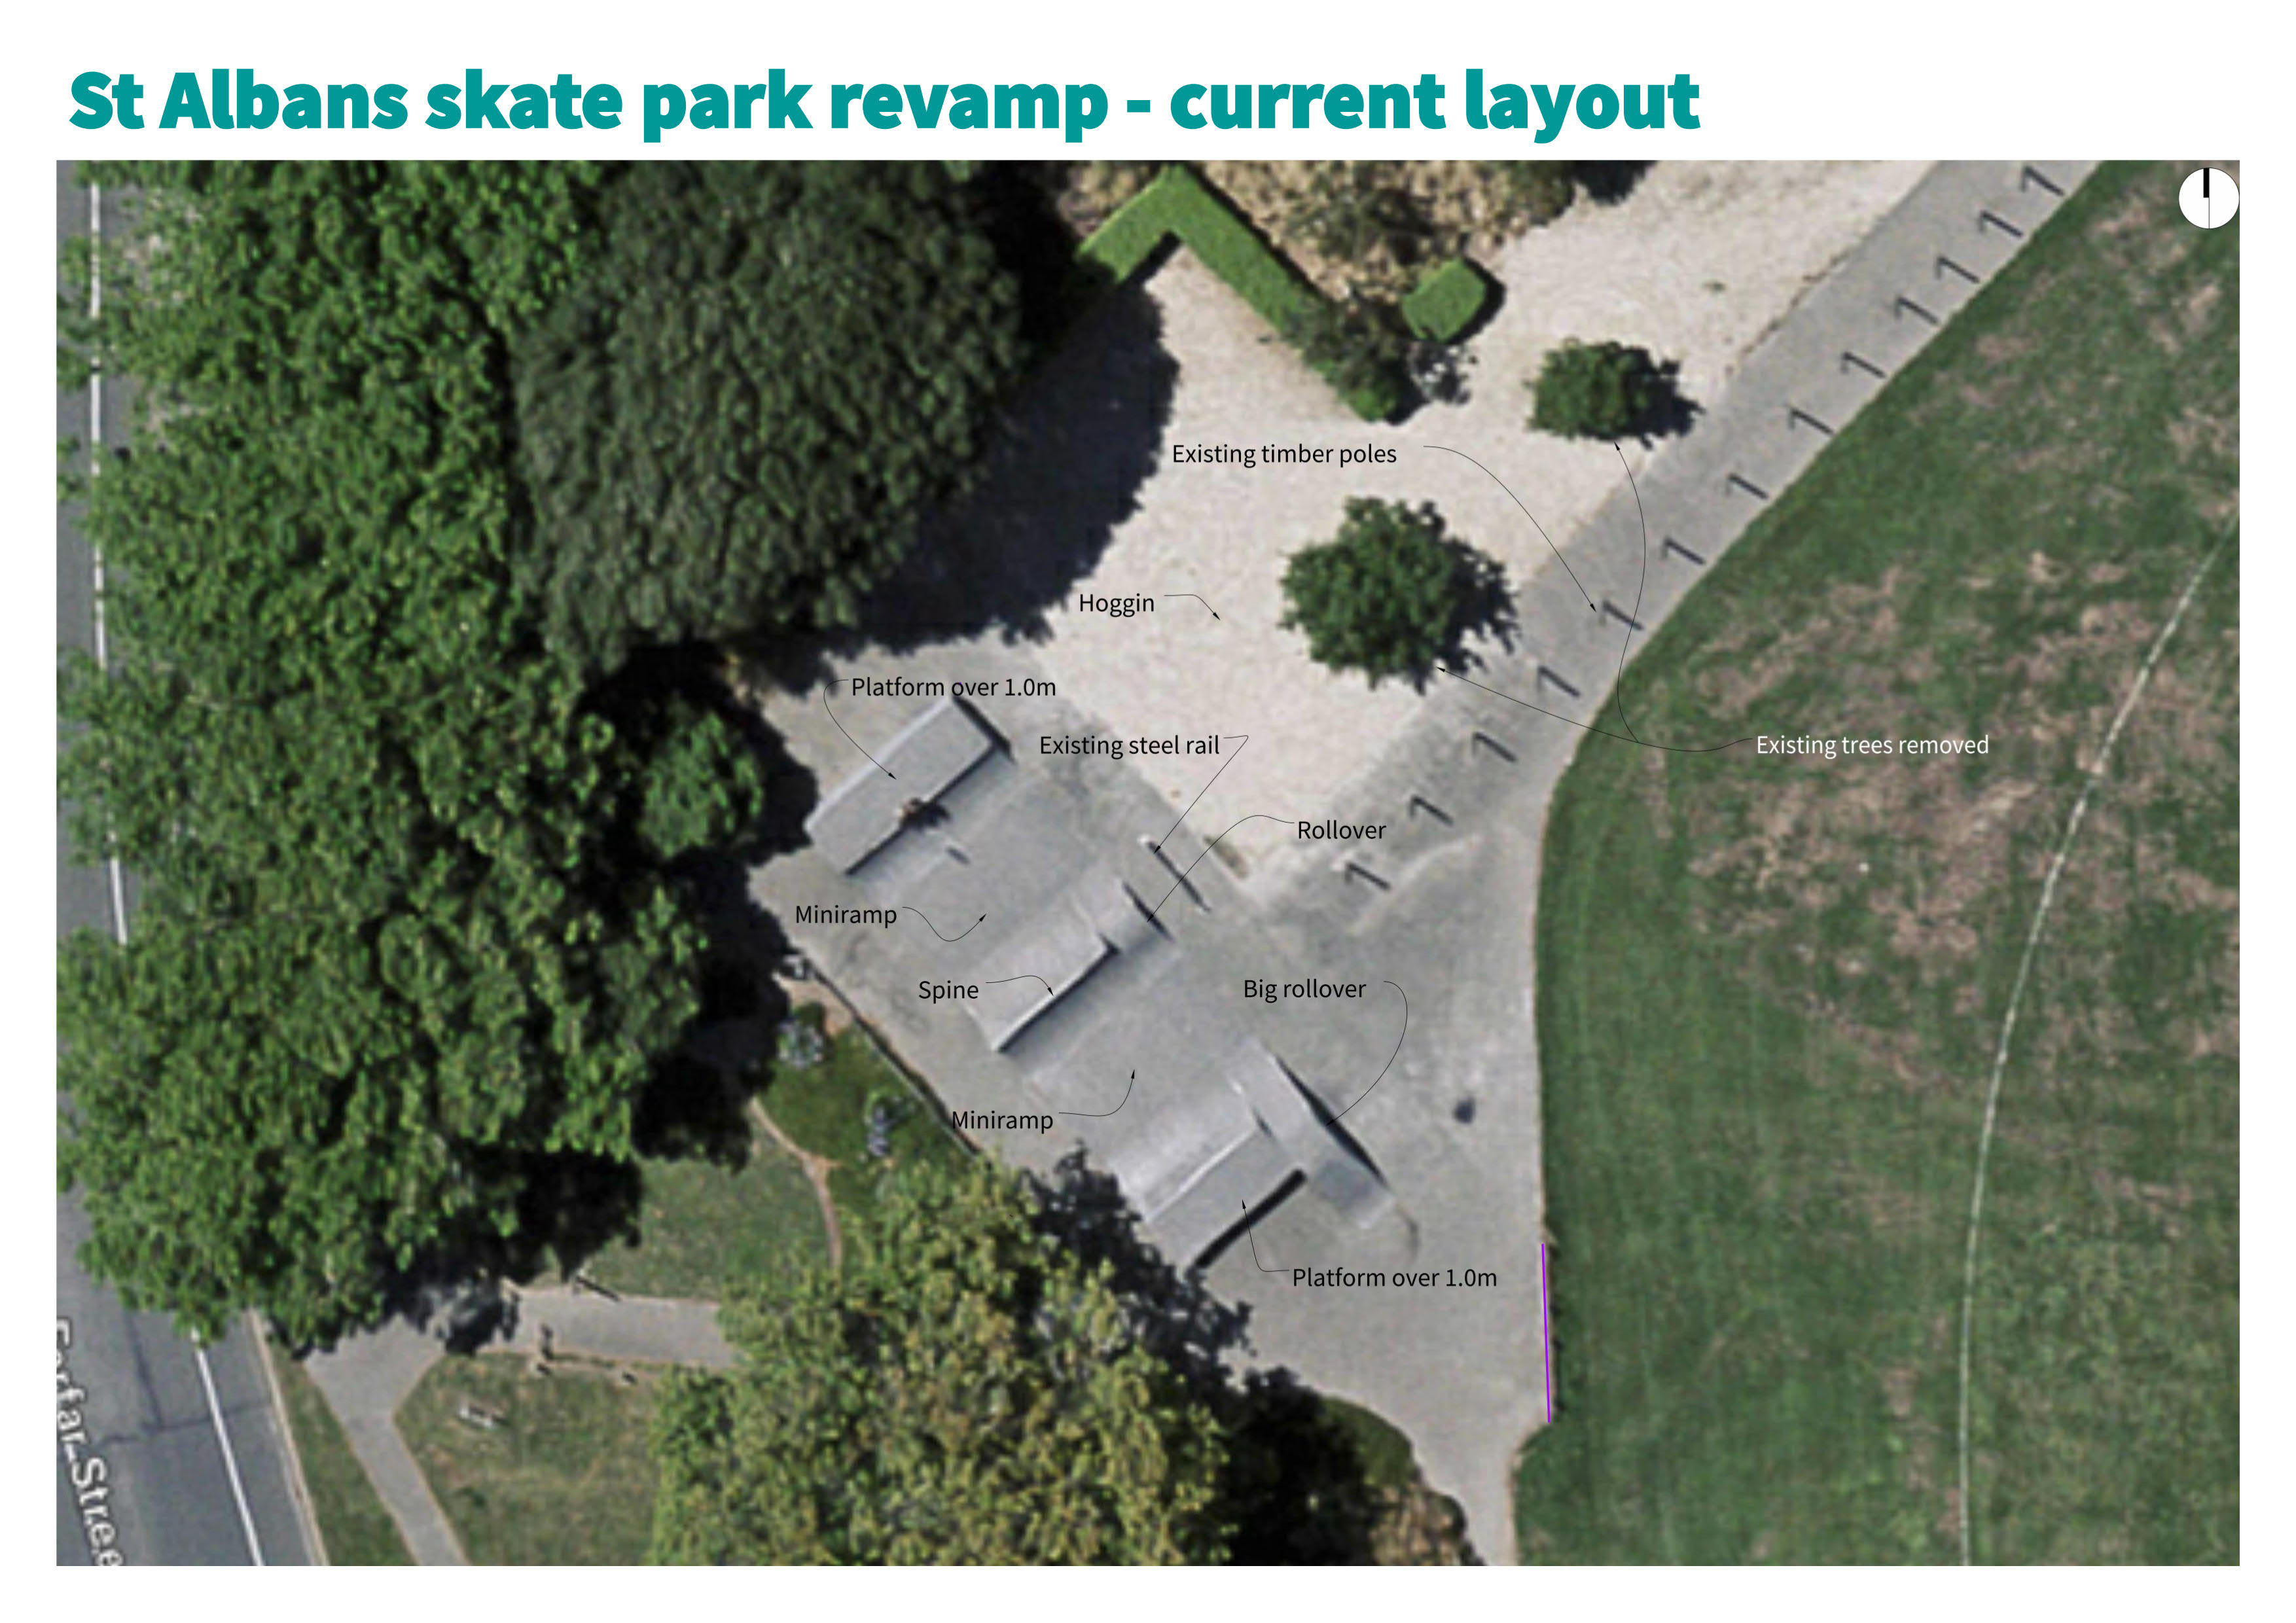 Current layout at St Albans skate park